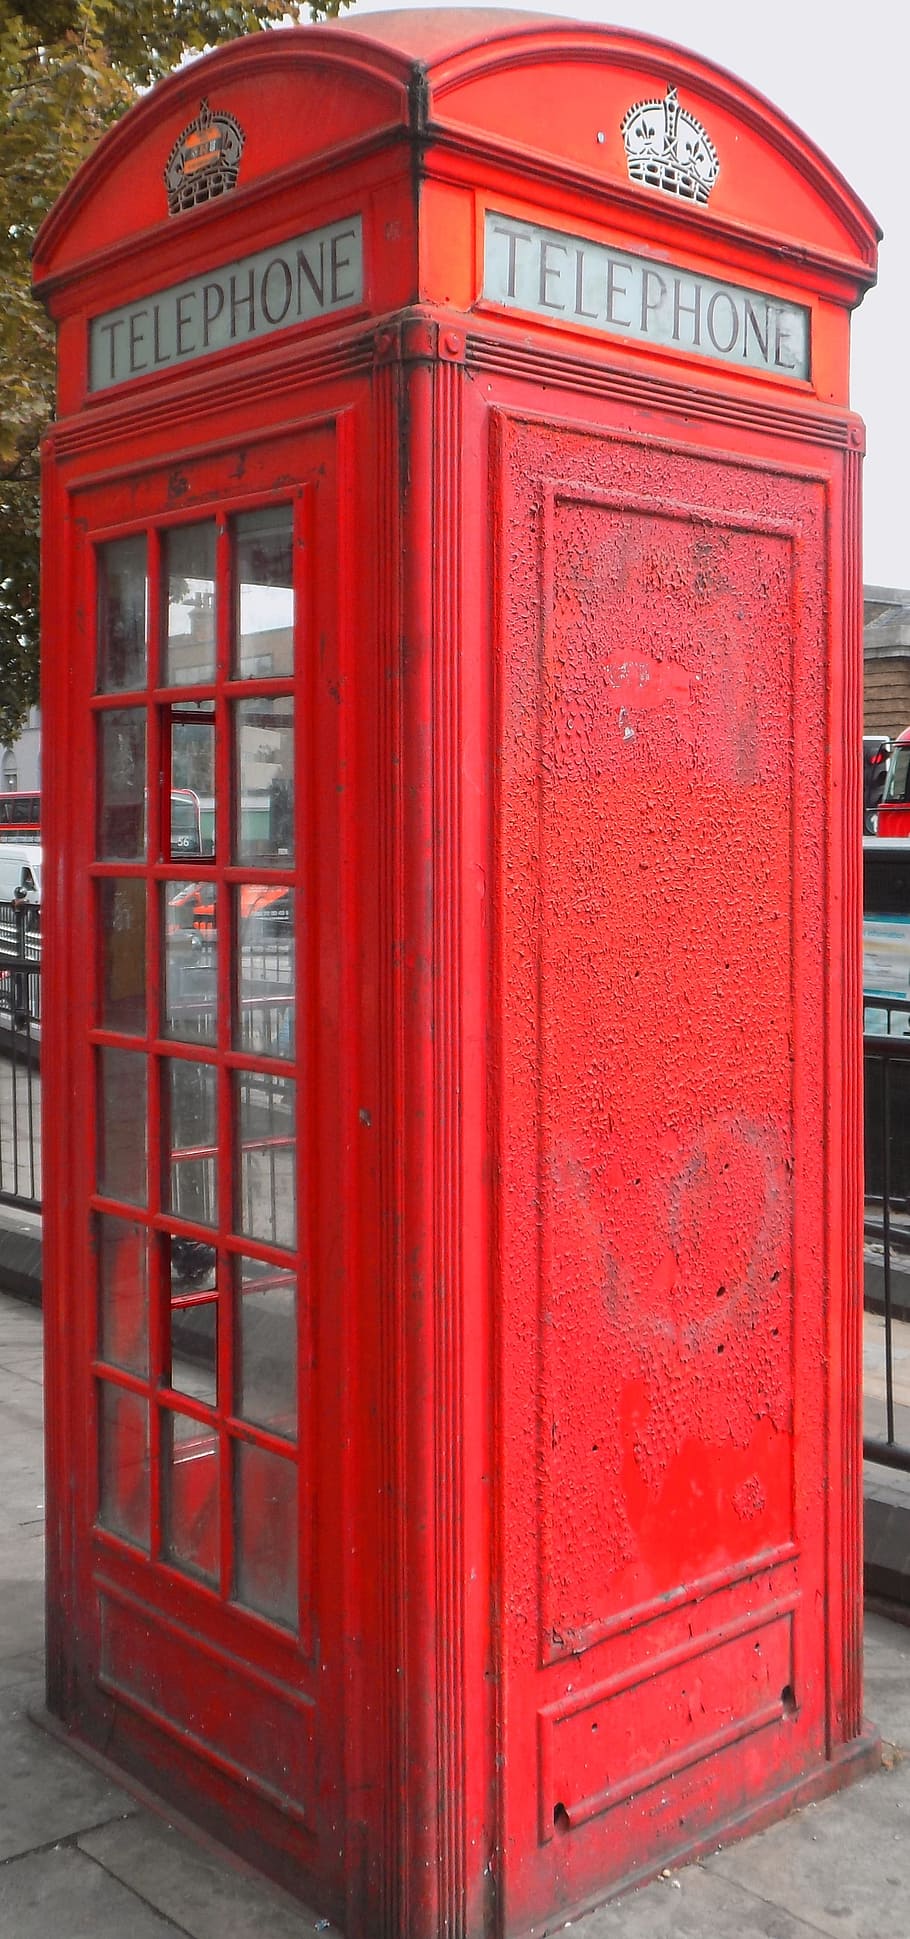 bilik telepon, london, telepon, komunikasi, merah, arsitektur, struktur buatan, teks, skrip barat, teknologi